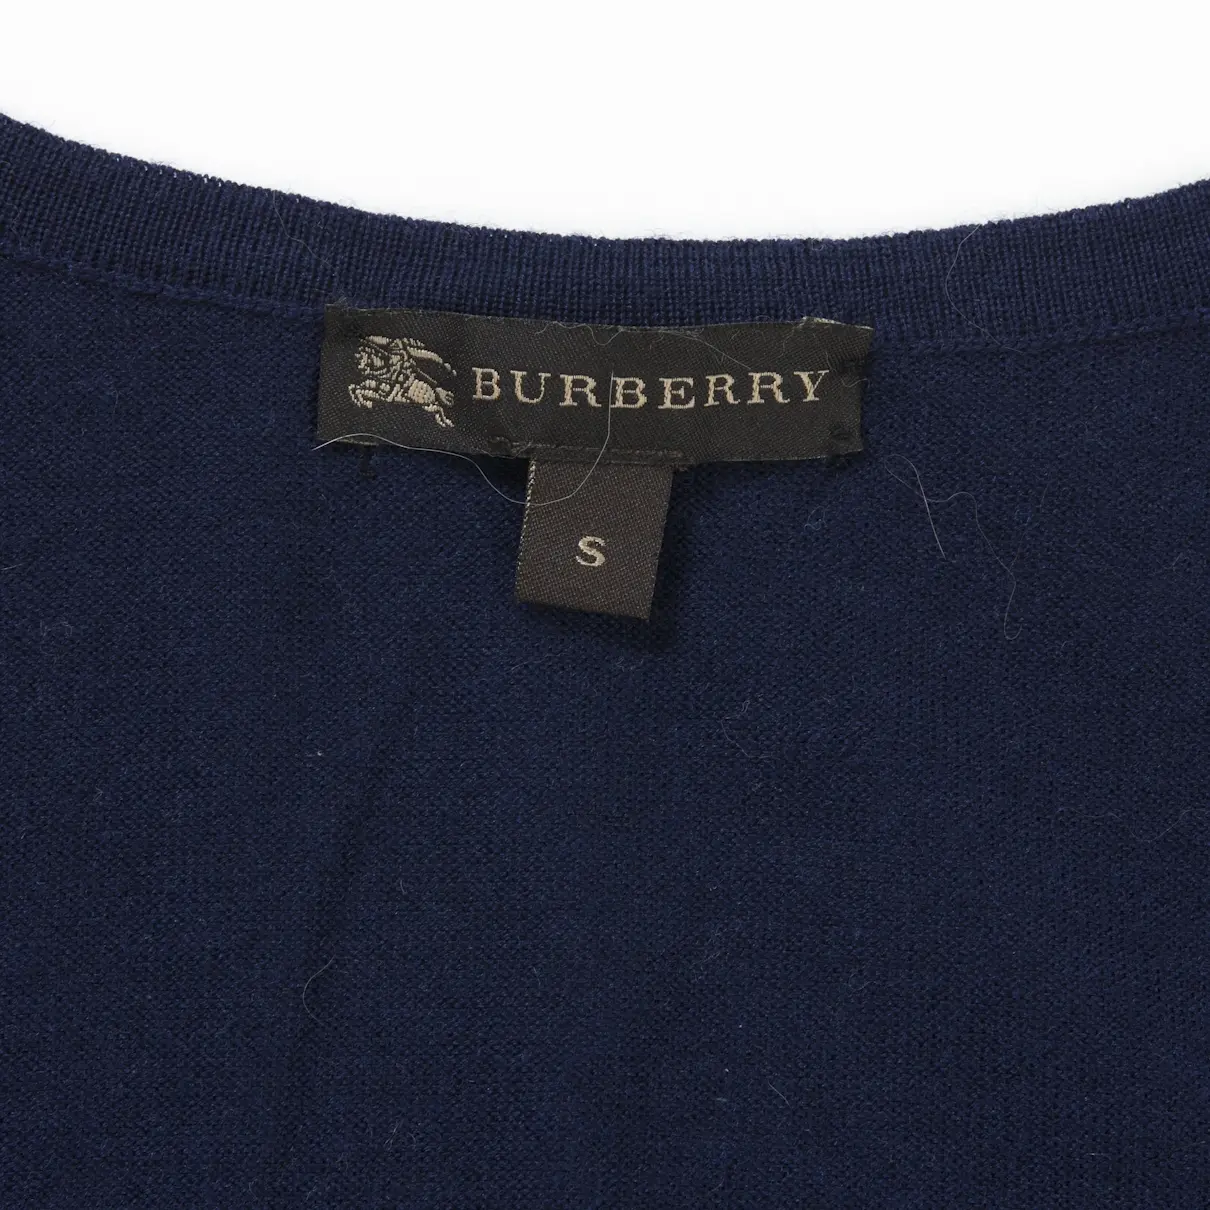 Buy Burberry Blue Wool Top online